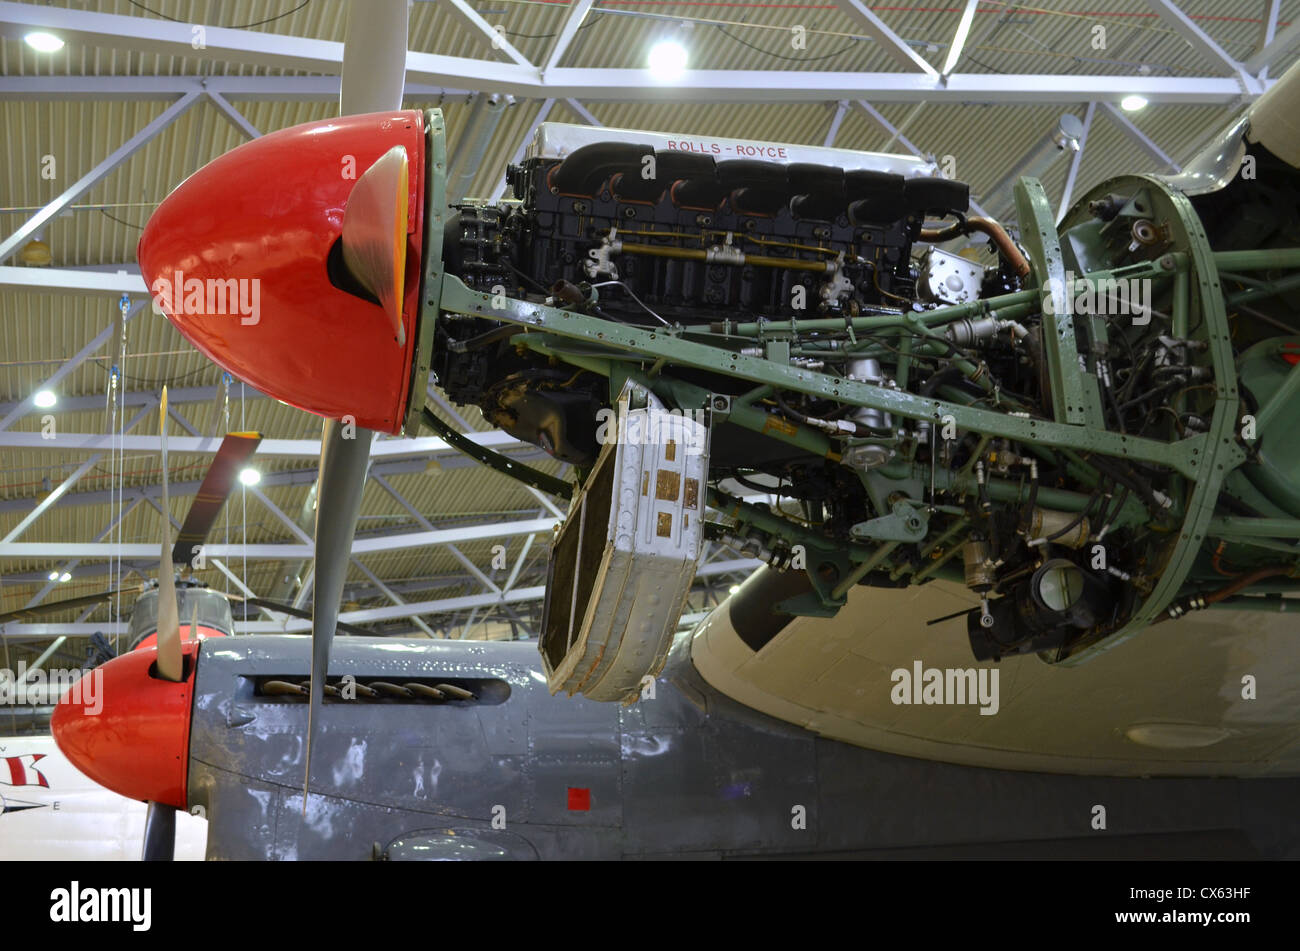 Rolls Royce Merlin V12 motore a pistoni, Avro York, Duxford spazio aereo Foto Stock